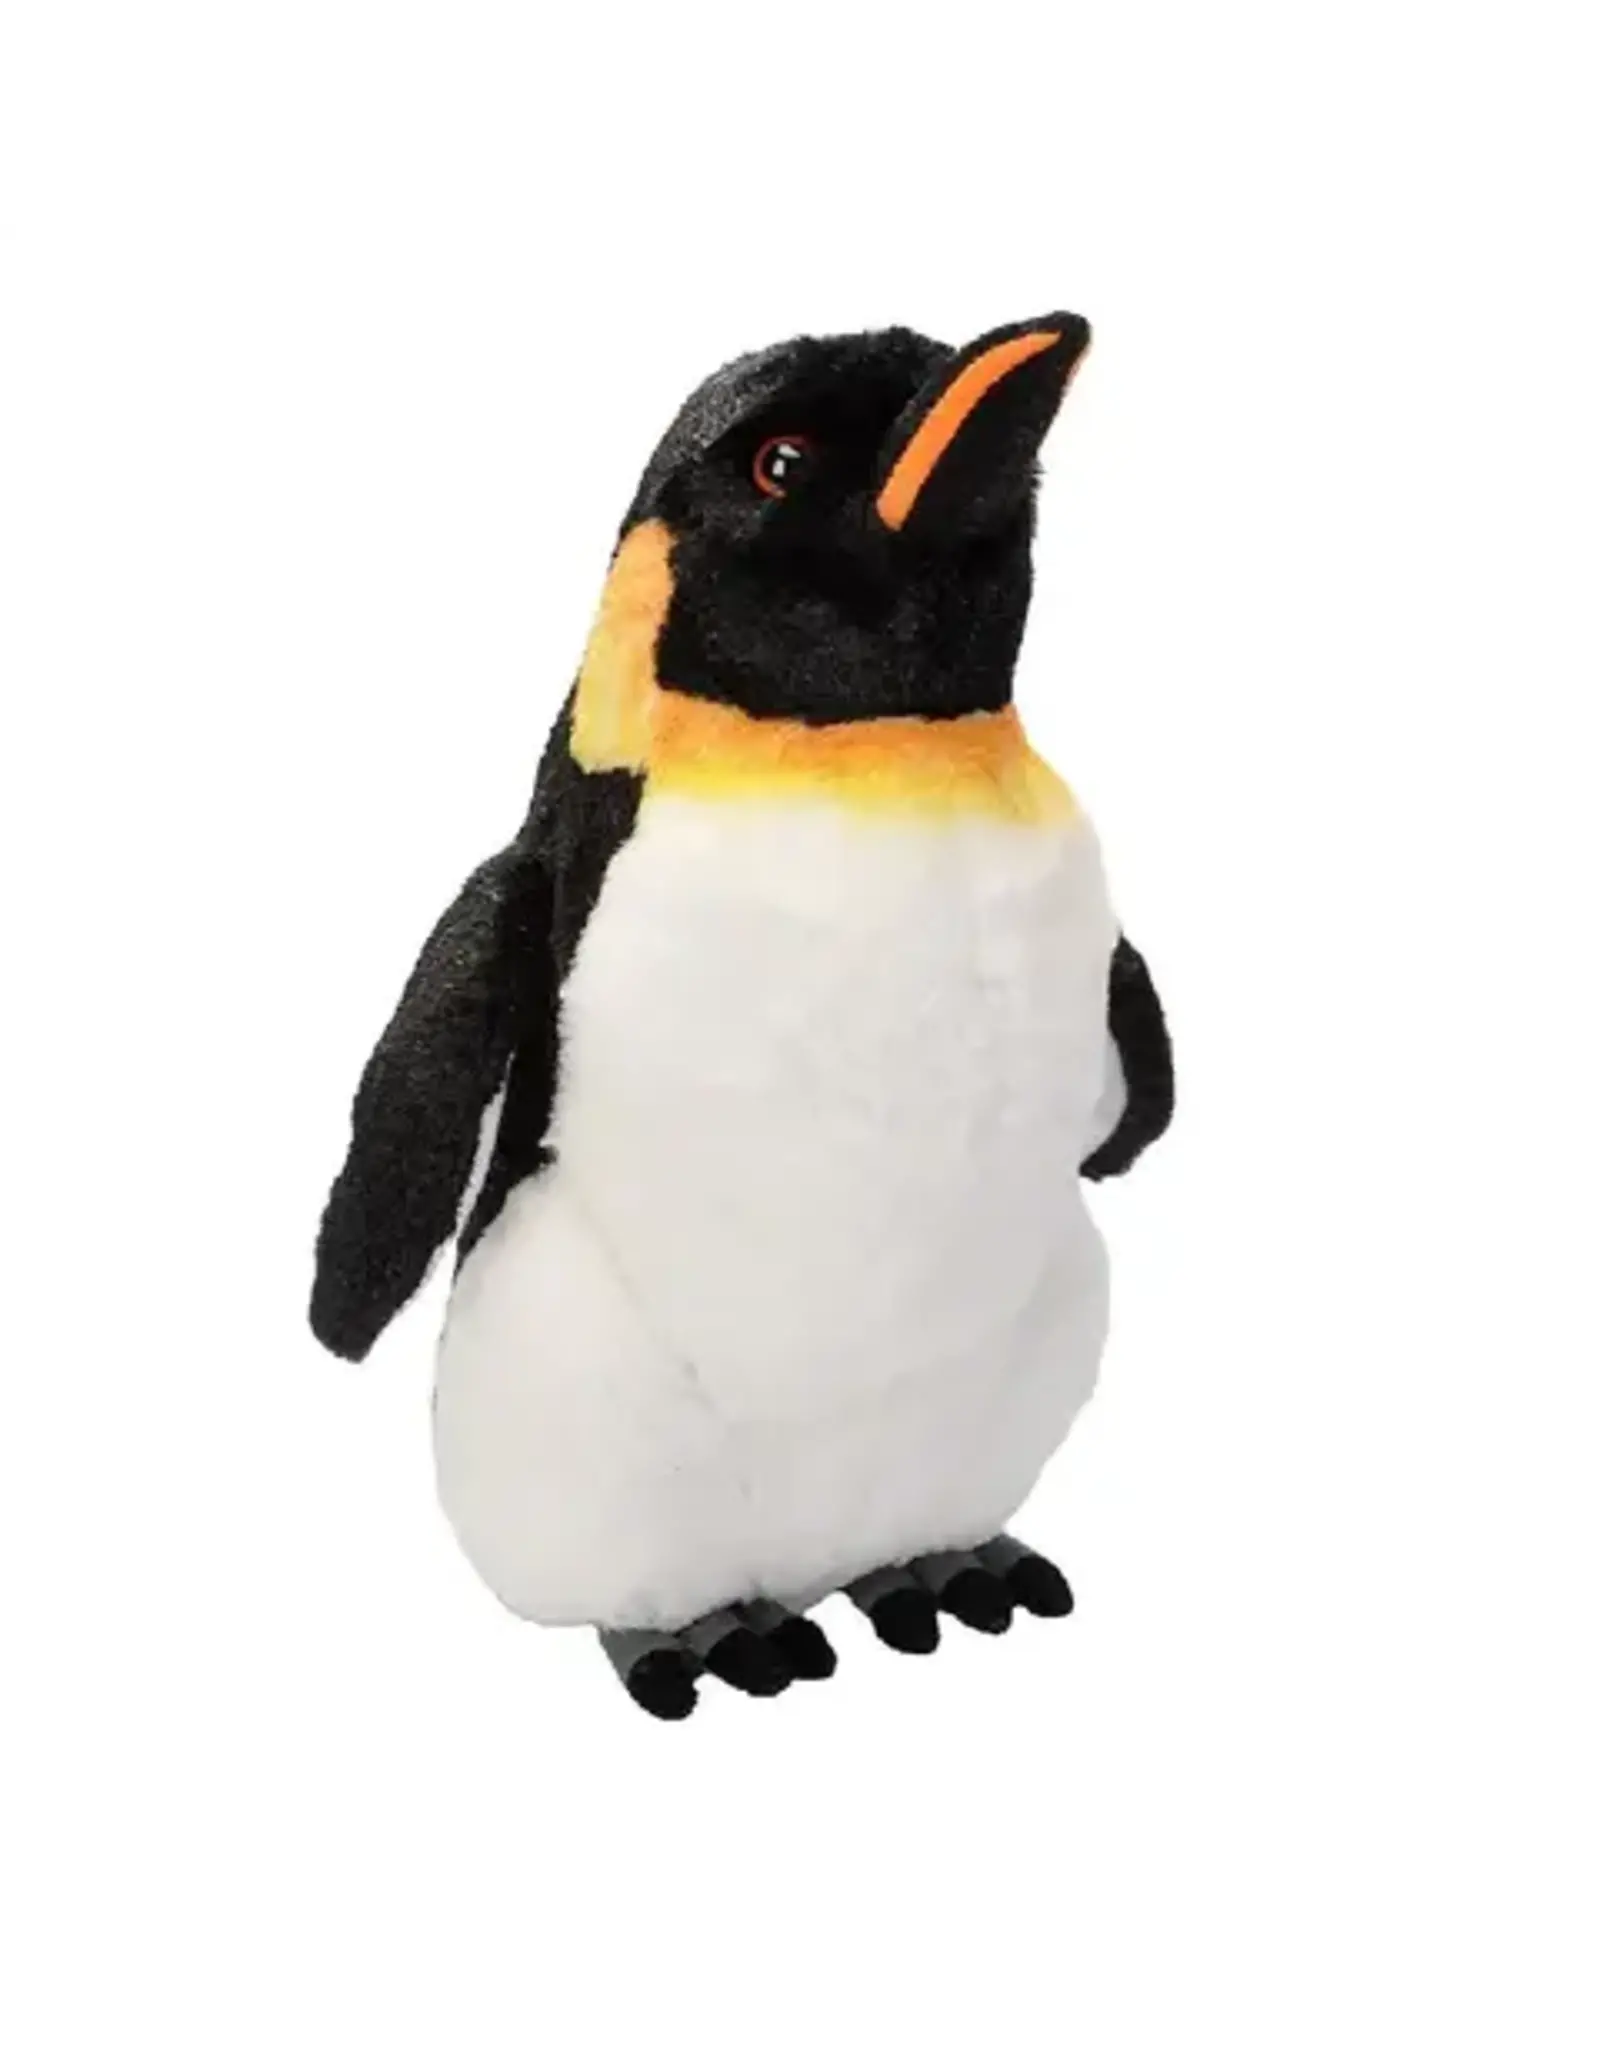 Emperor Penguin Stuffed Animal - 12"